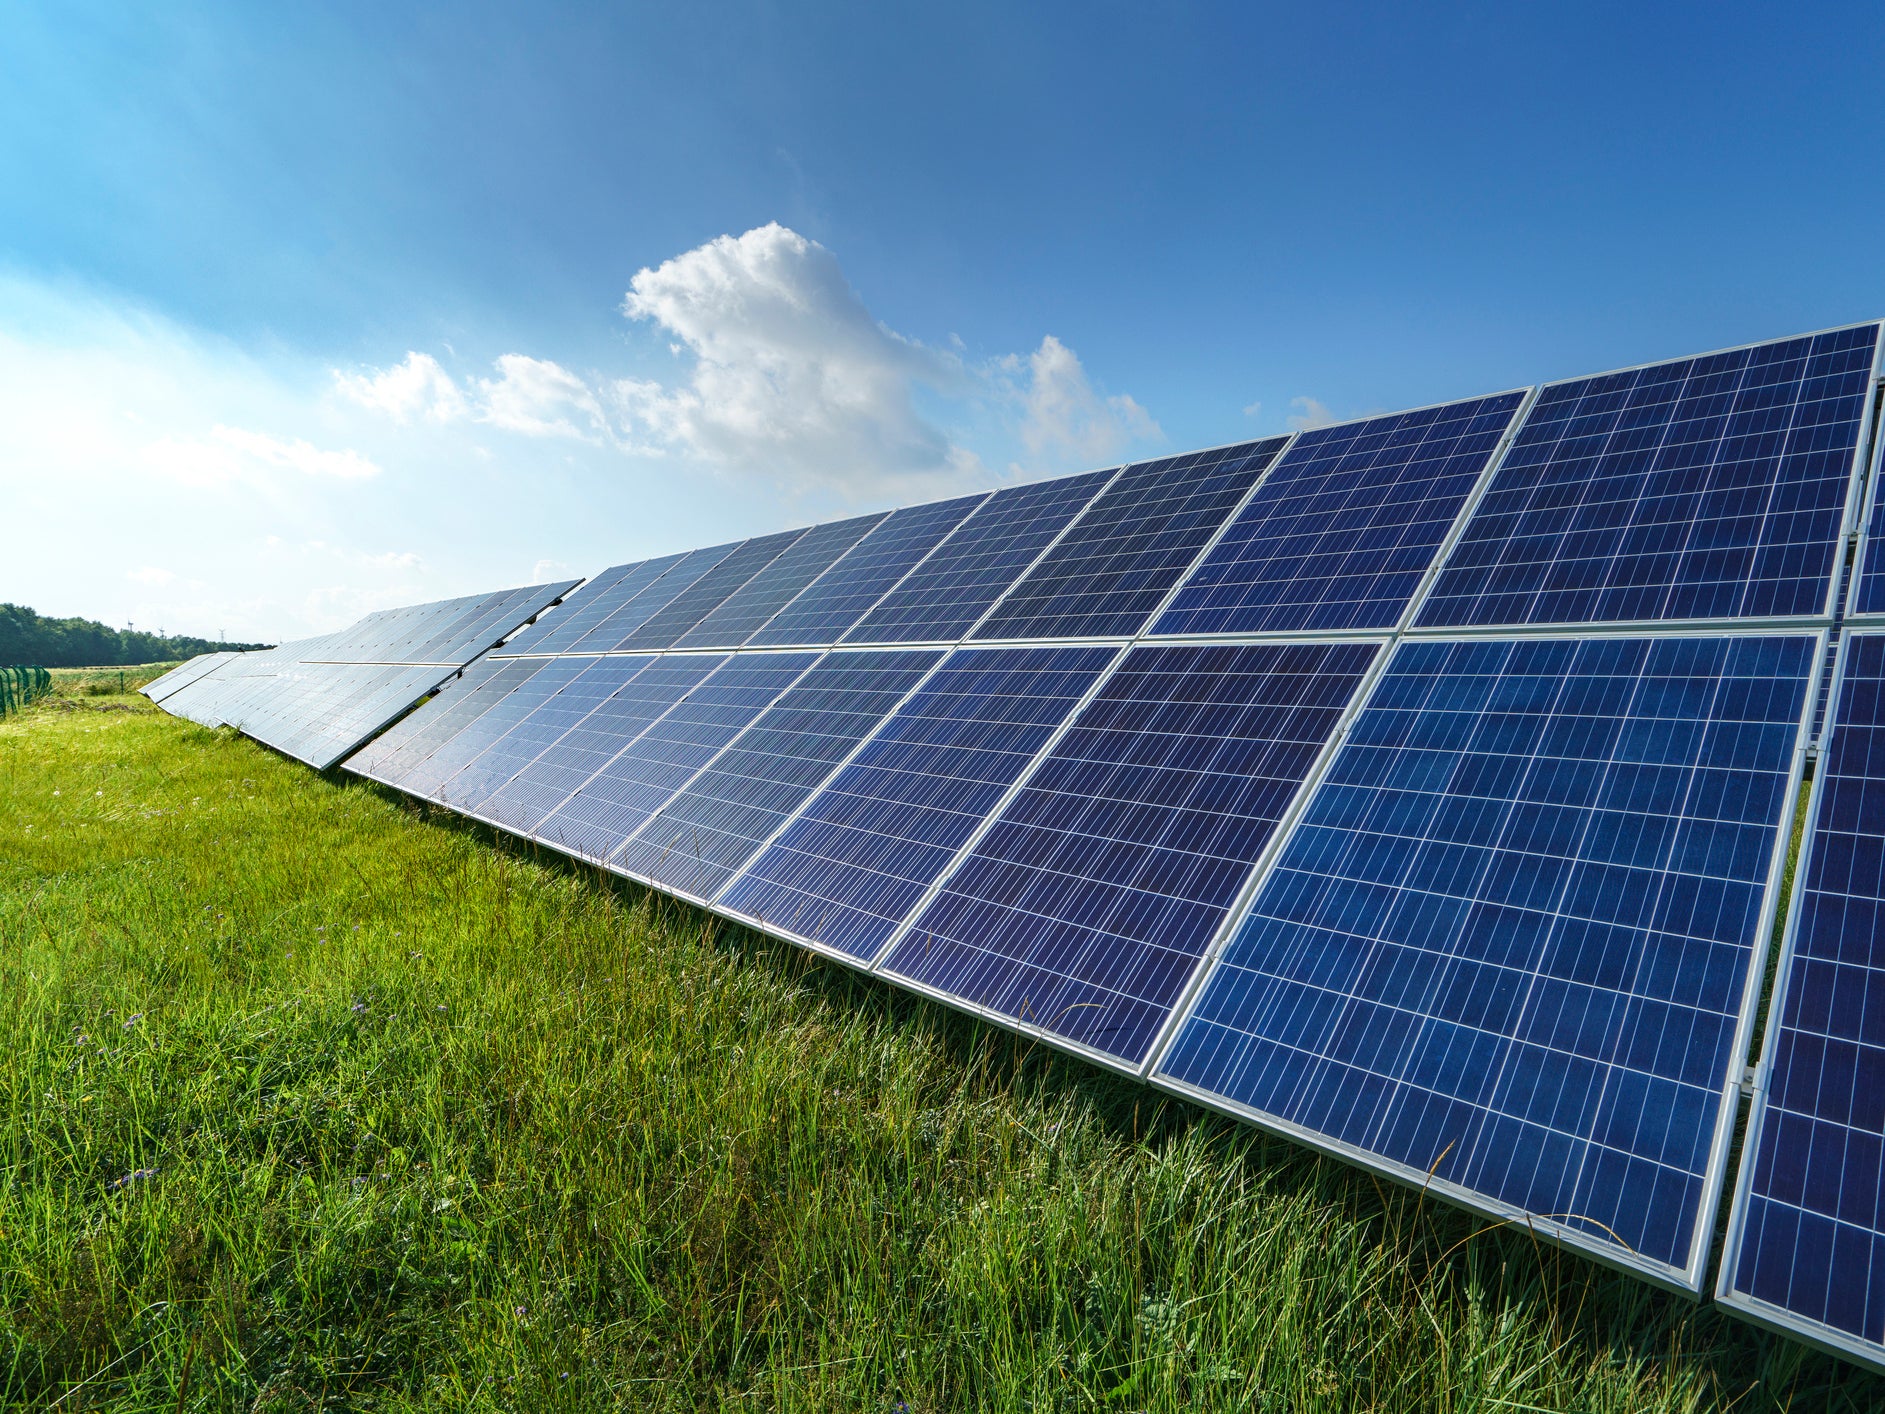 Warwickshire Solar Farm Gets Planning Approval